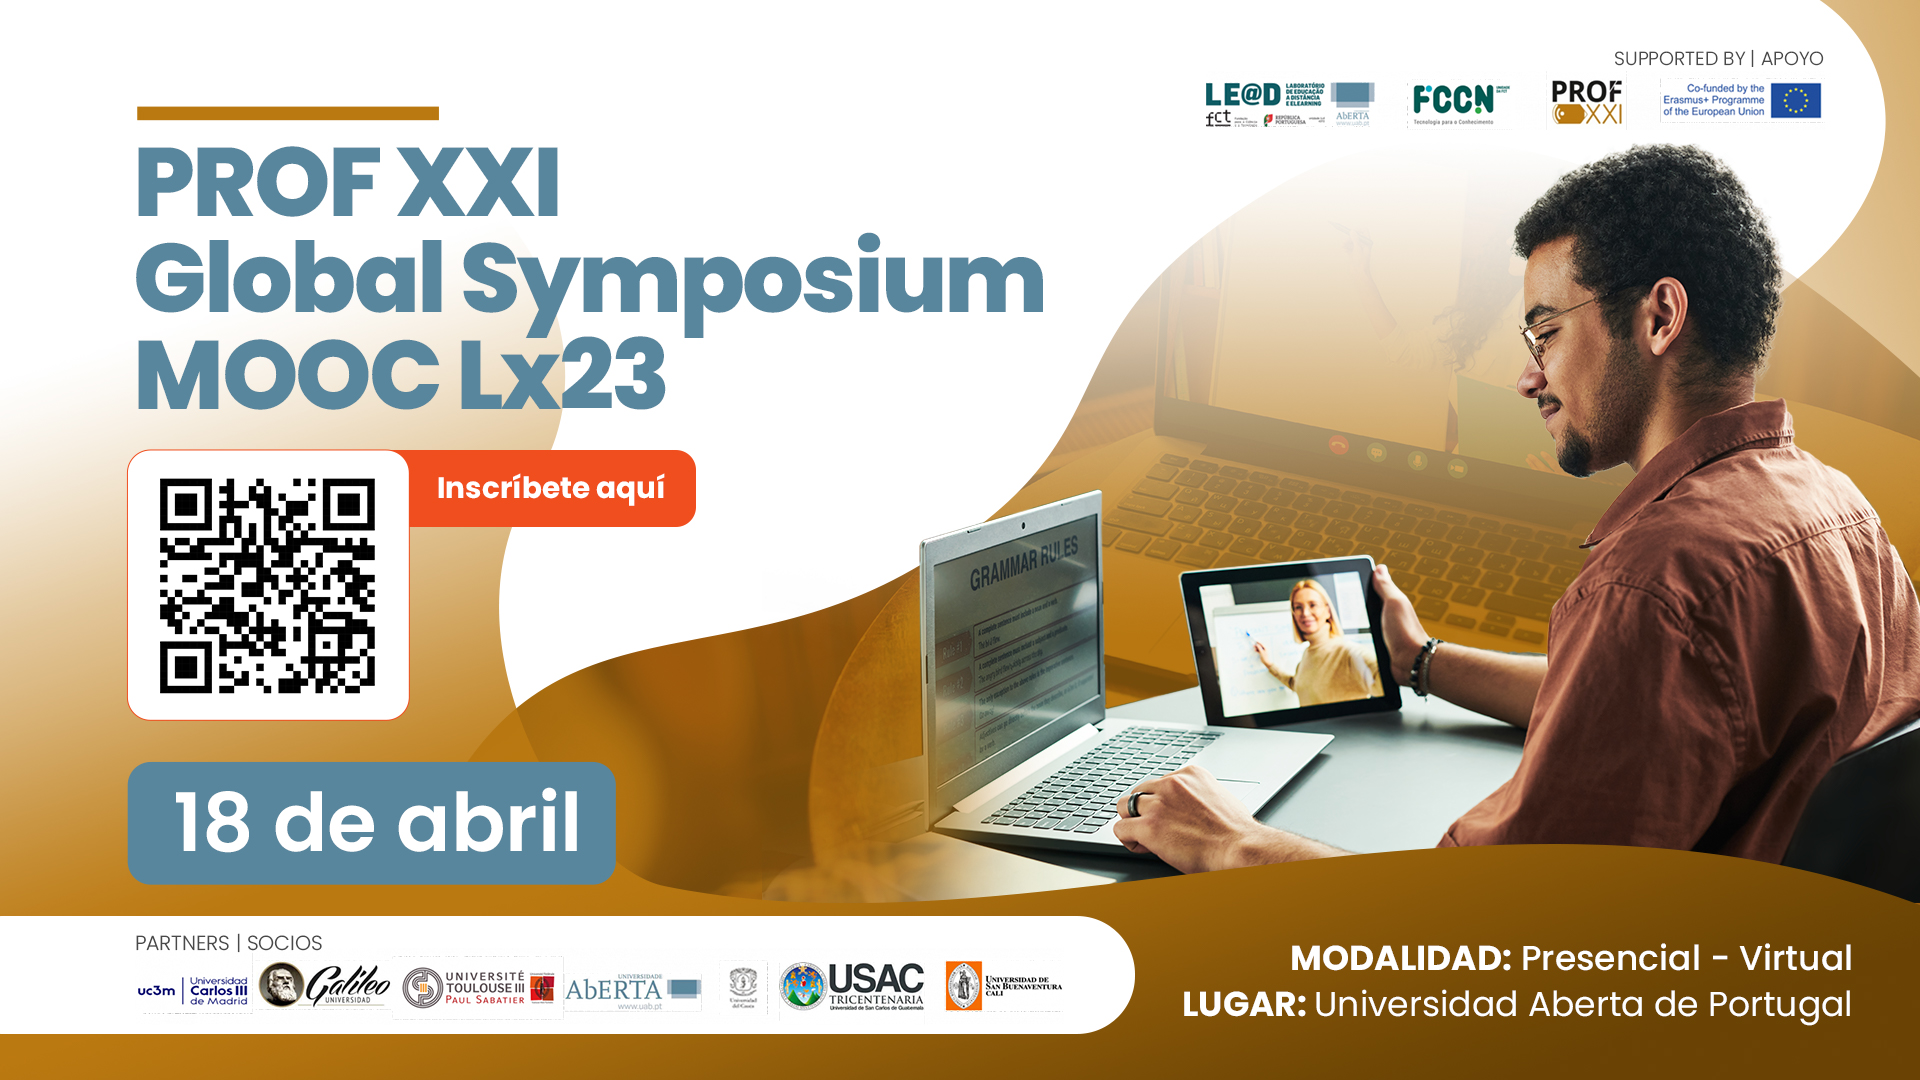 PROF XXI Global Symposium MOOC Lx23